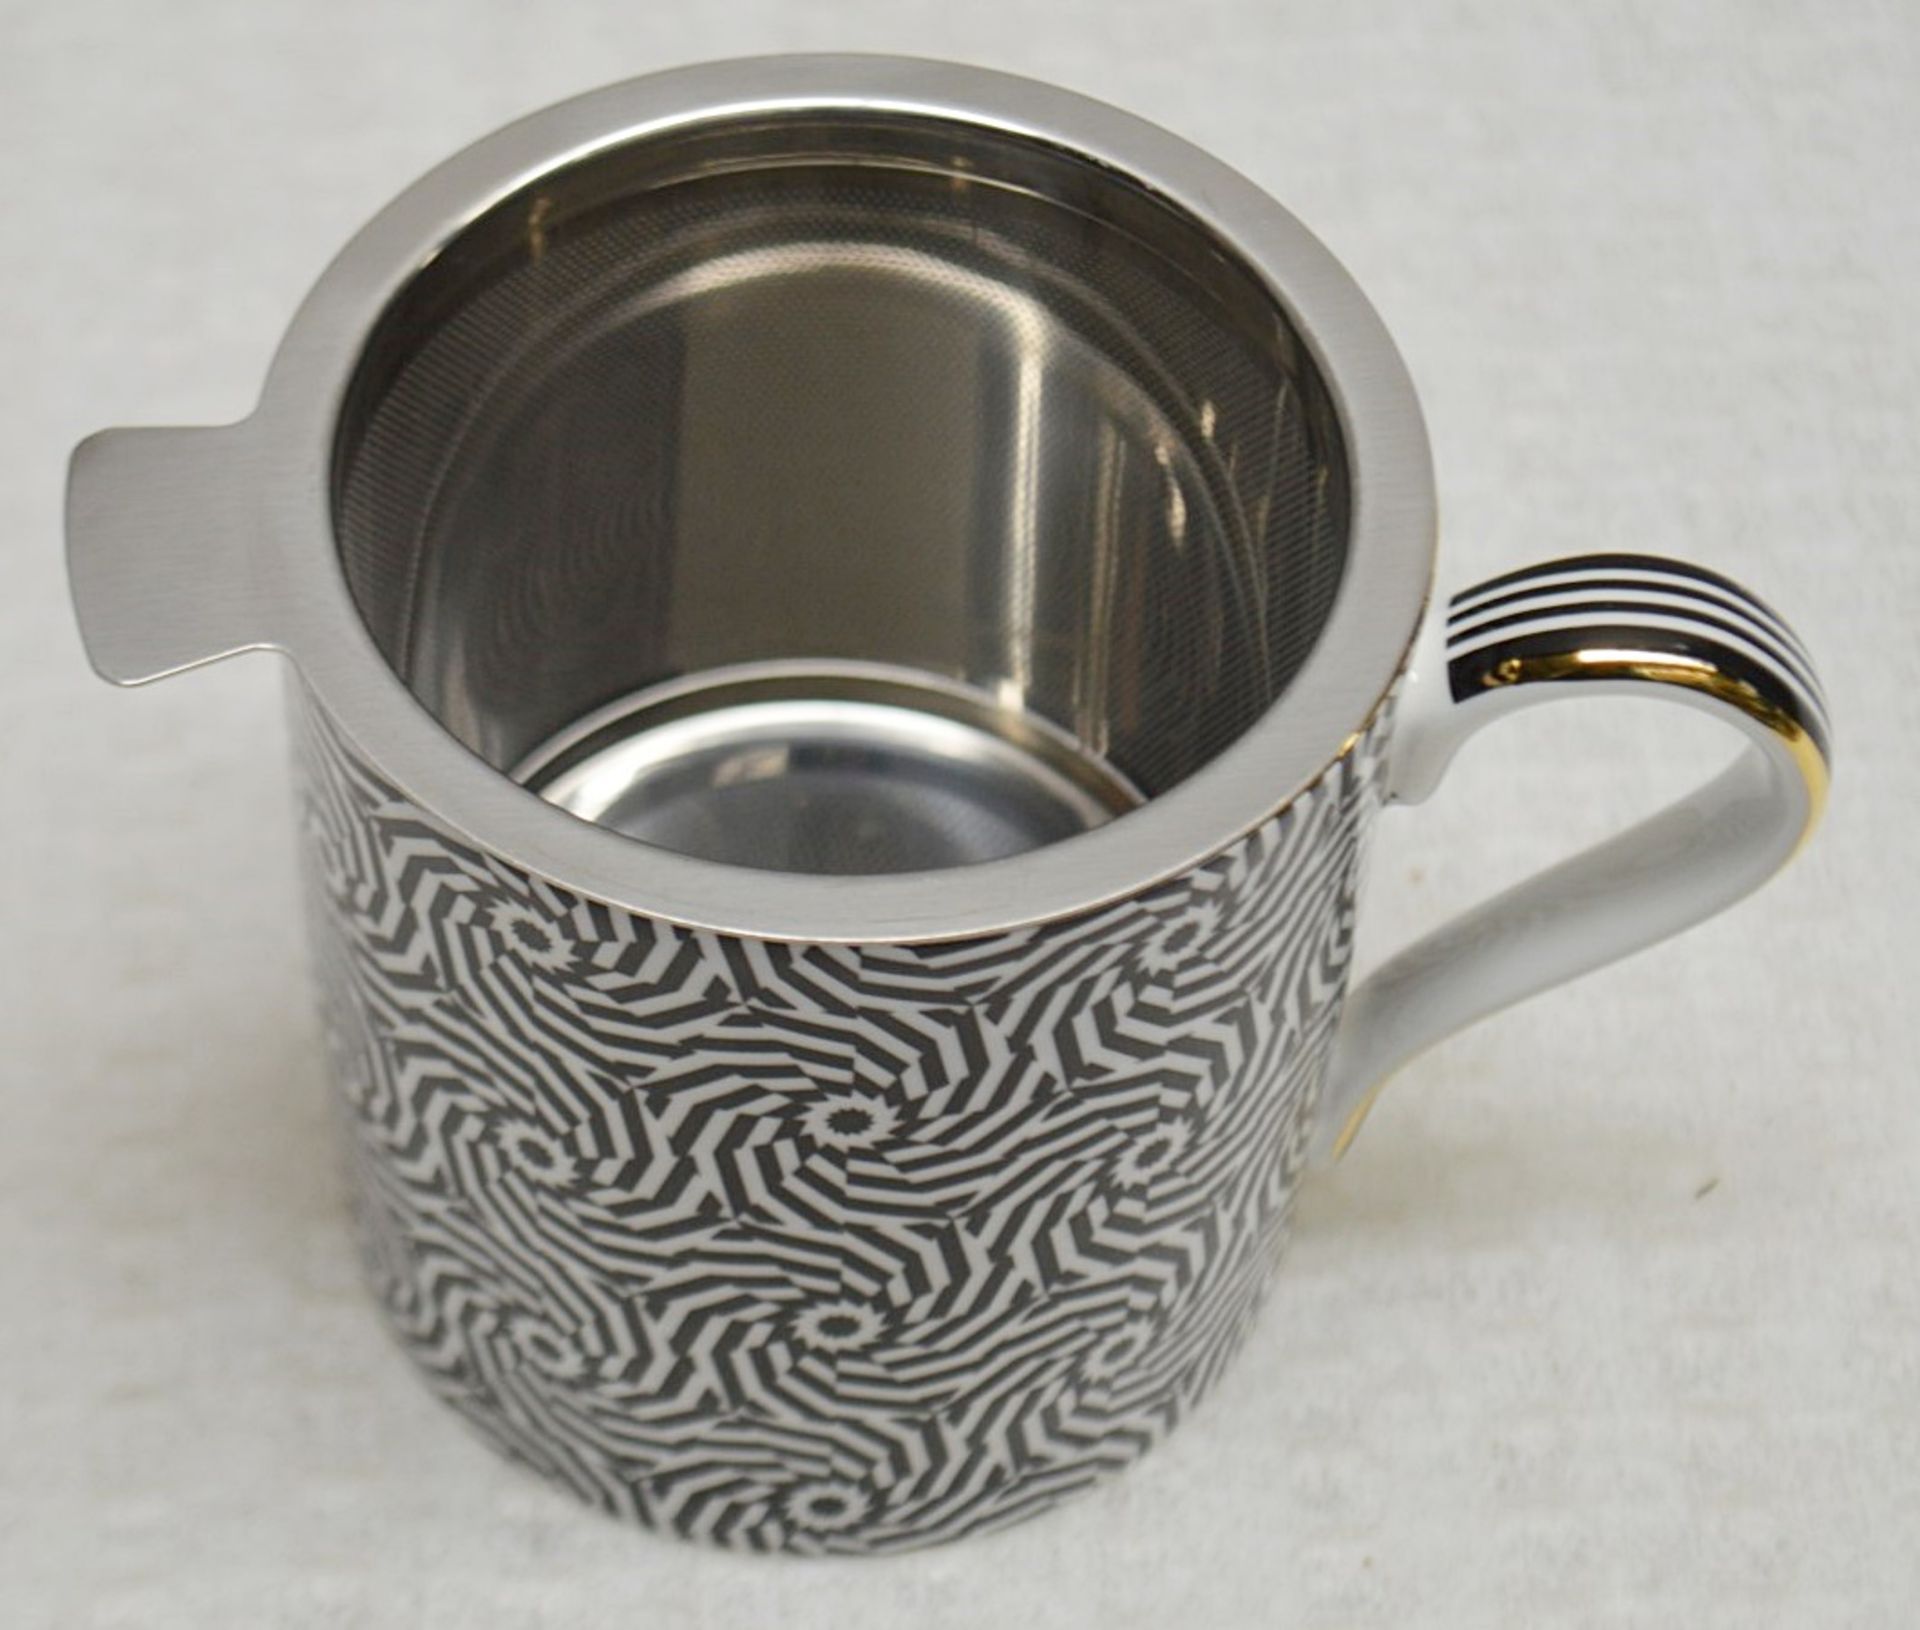 1 x T2 'Maze' Designer Mug Infuser - Ref: HHW67/JUL21 - CL011 - Location: Altrincham WA14 - Image 2 of 6